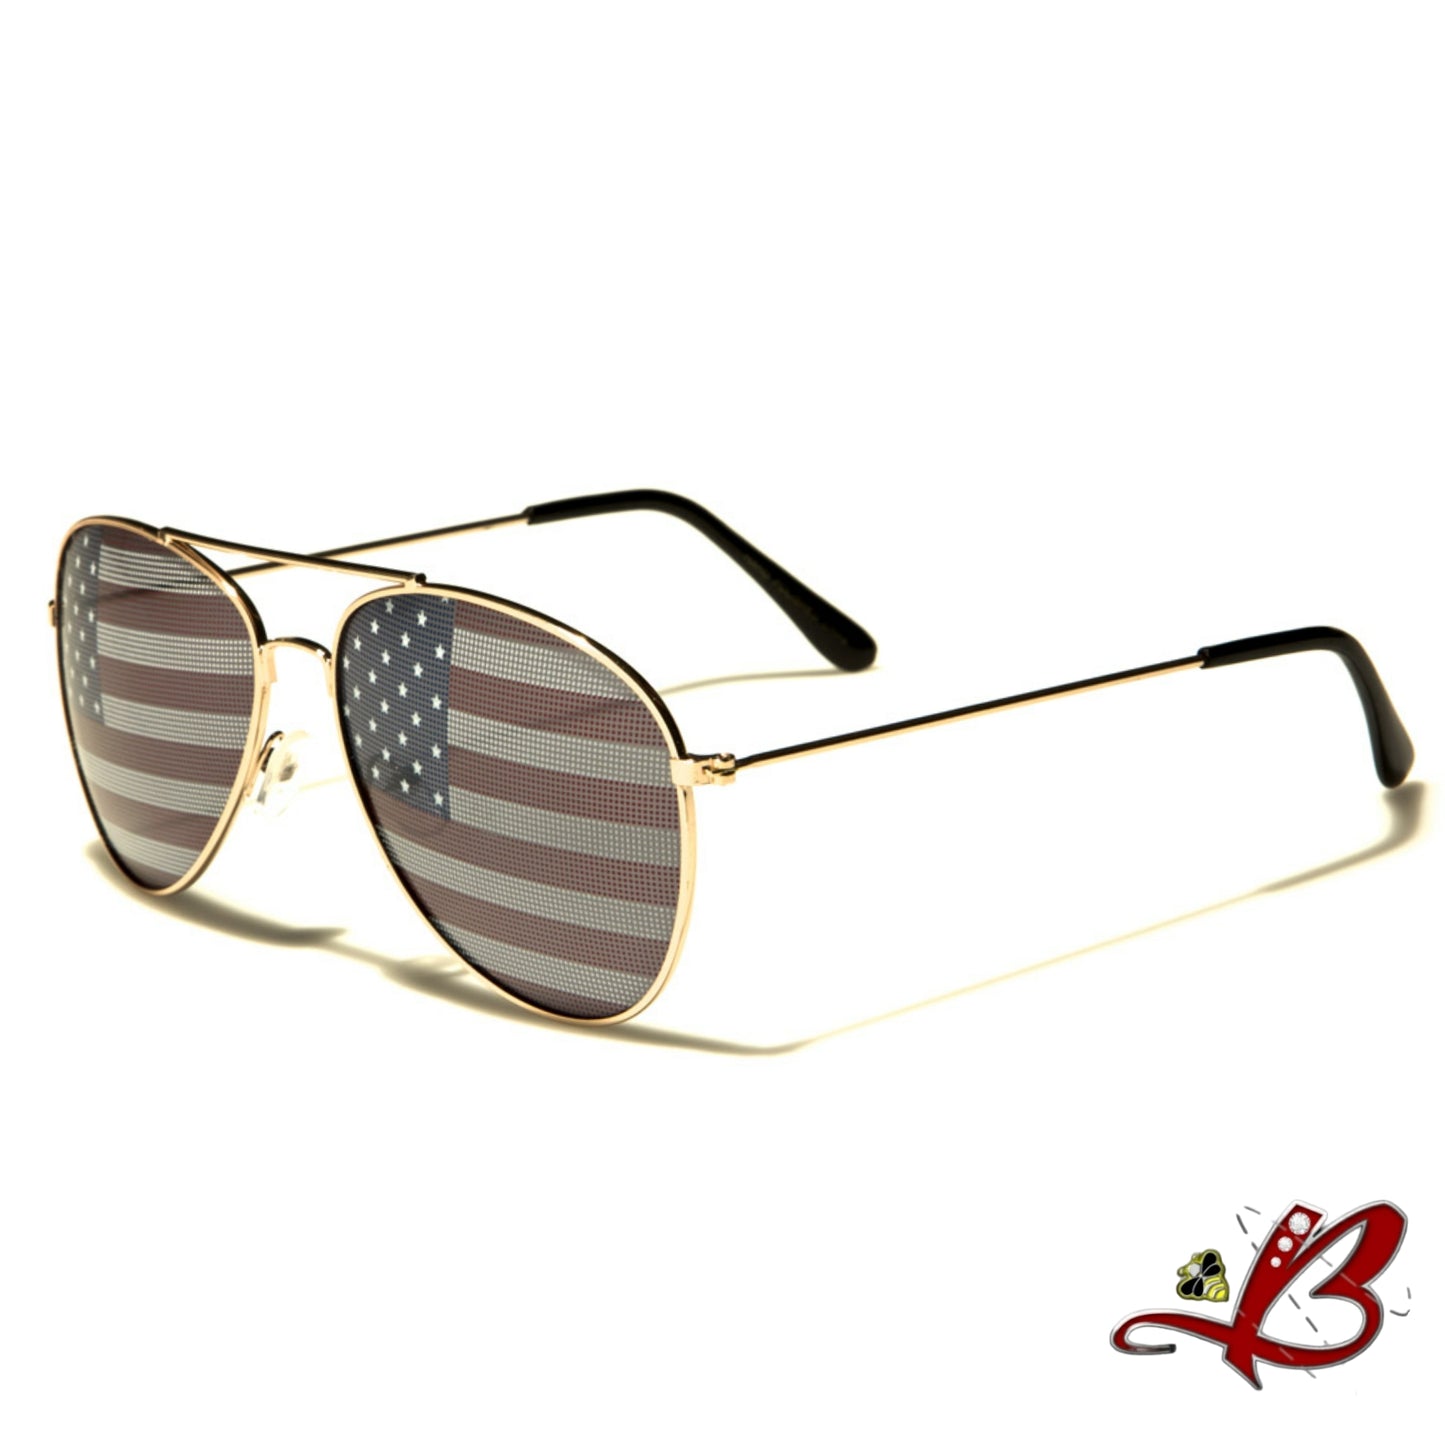 Old Glory USA Flag Retro Aviator Classic Sunglasses United States of America Patriotic Shades